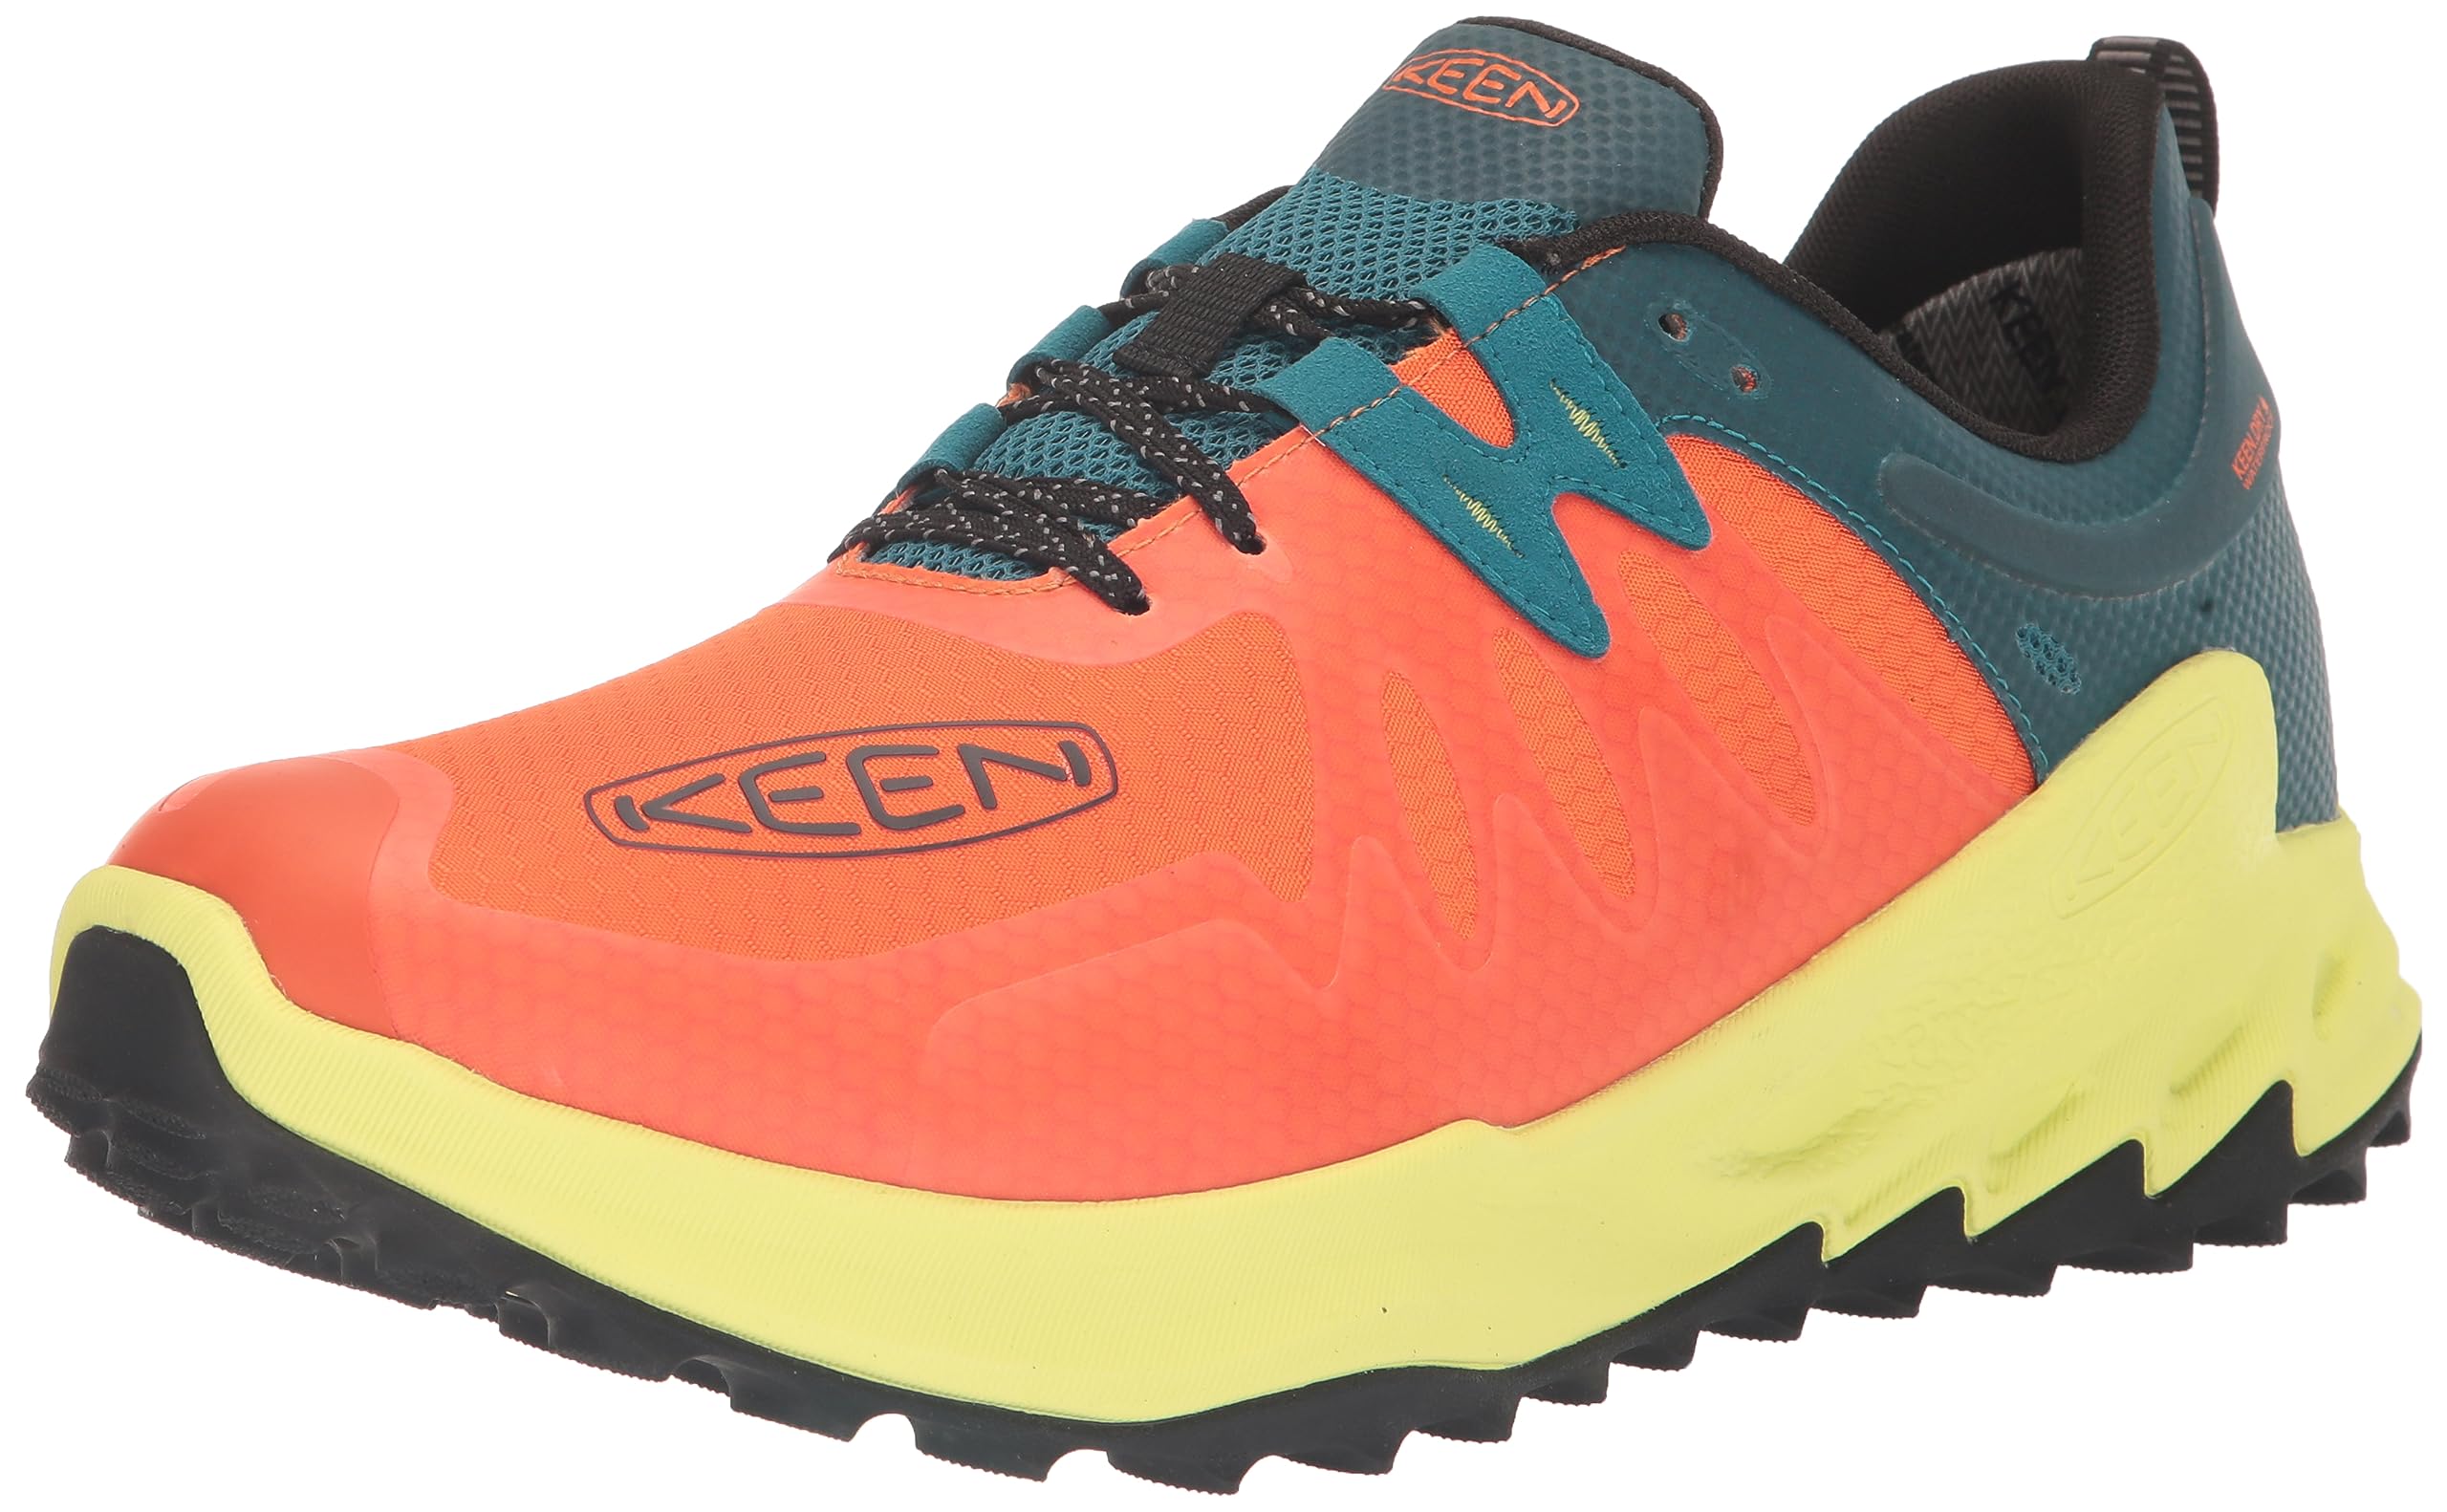 KEEN Men's Zionic Low Height Waterproof All Terrain Hiking Shoes